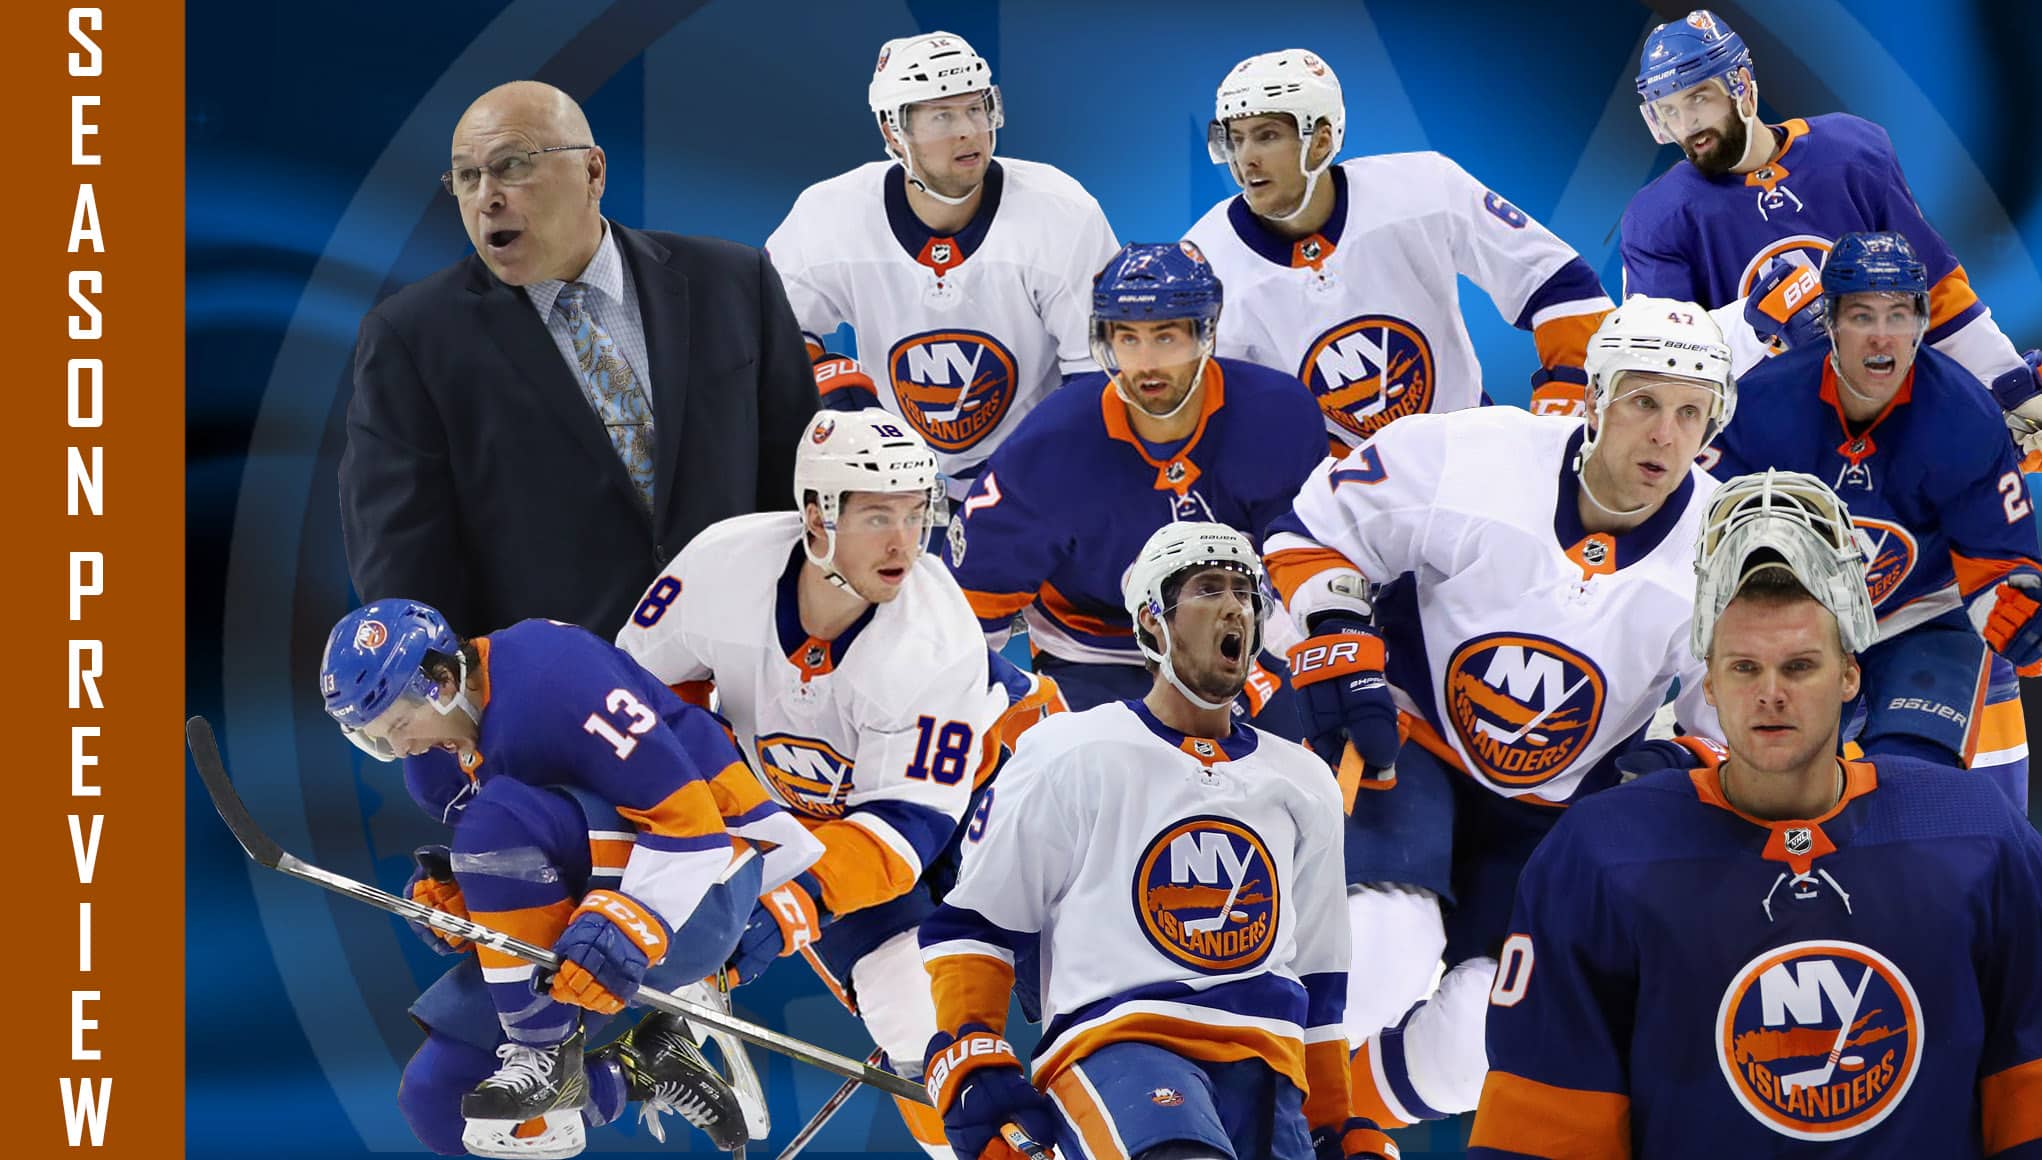 20202021 New York Islanders Season Tickets (Includes Tickets To All